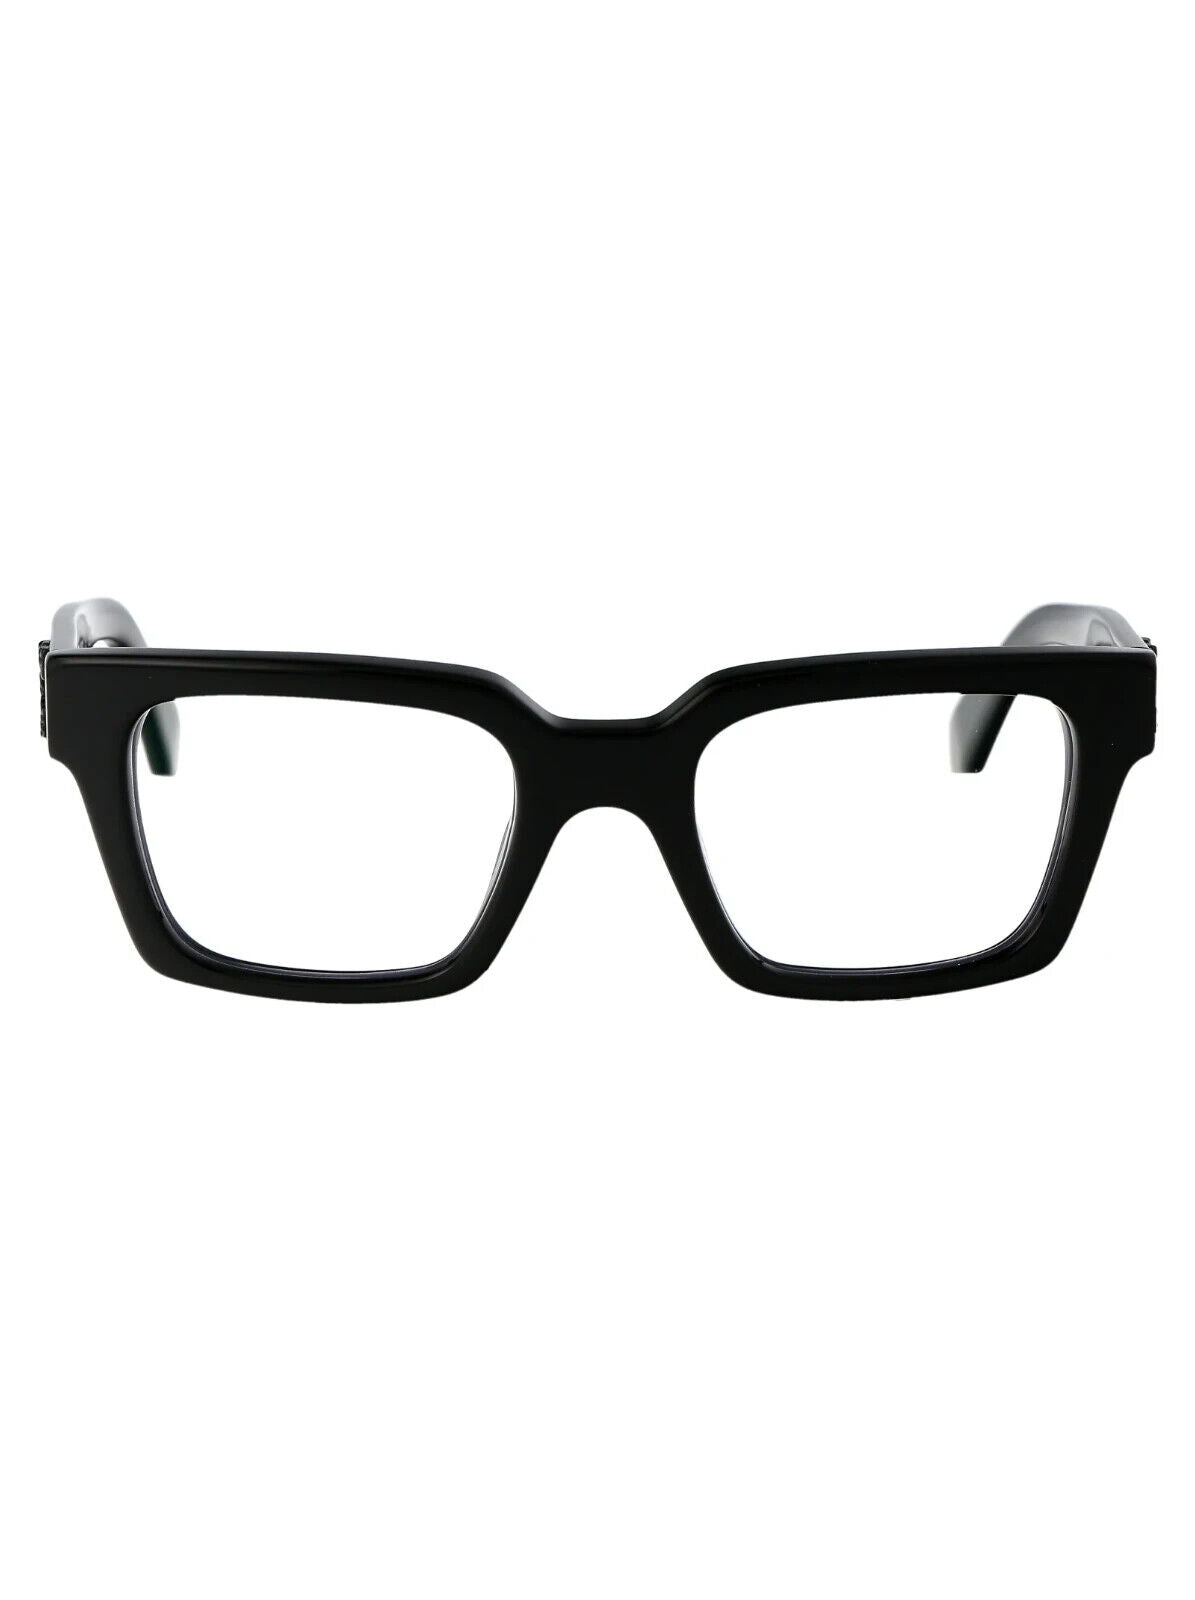 OFF-WHITE Clip On Black Green 0mm New Sunglasses